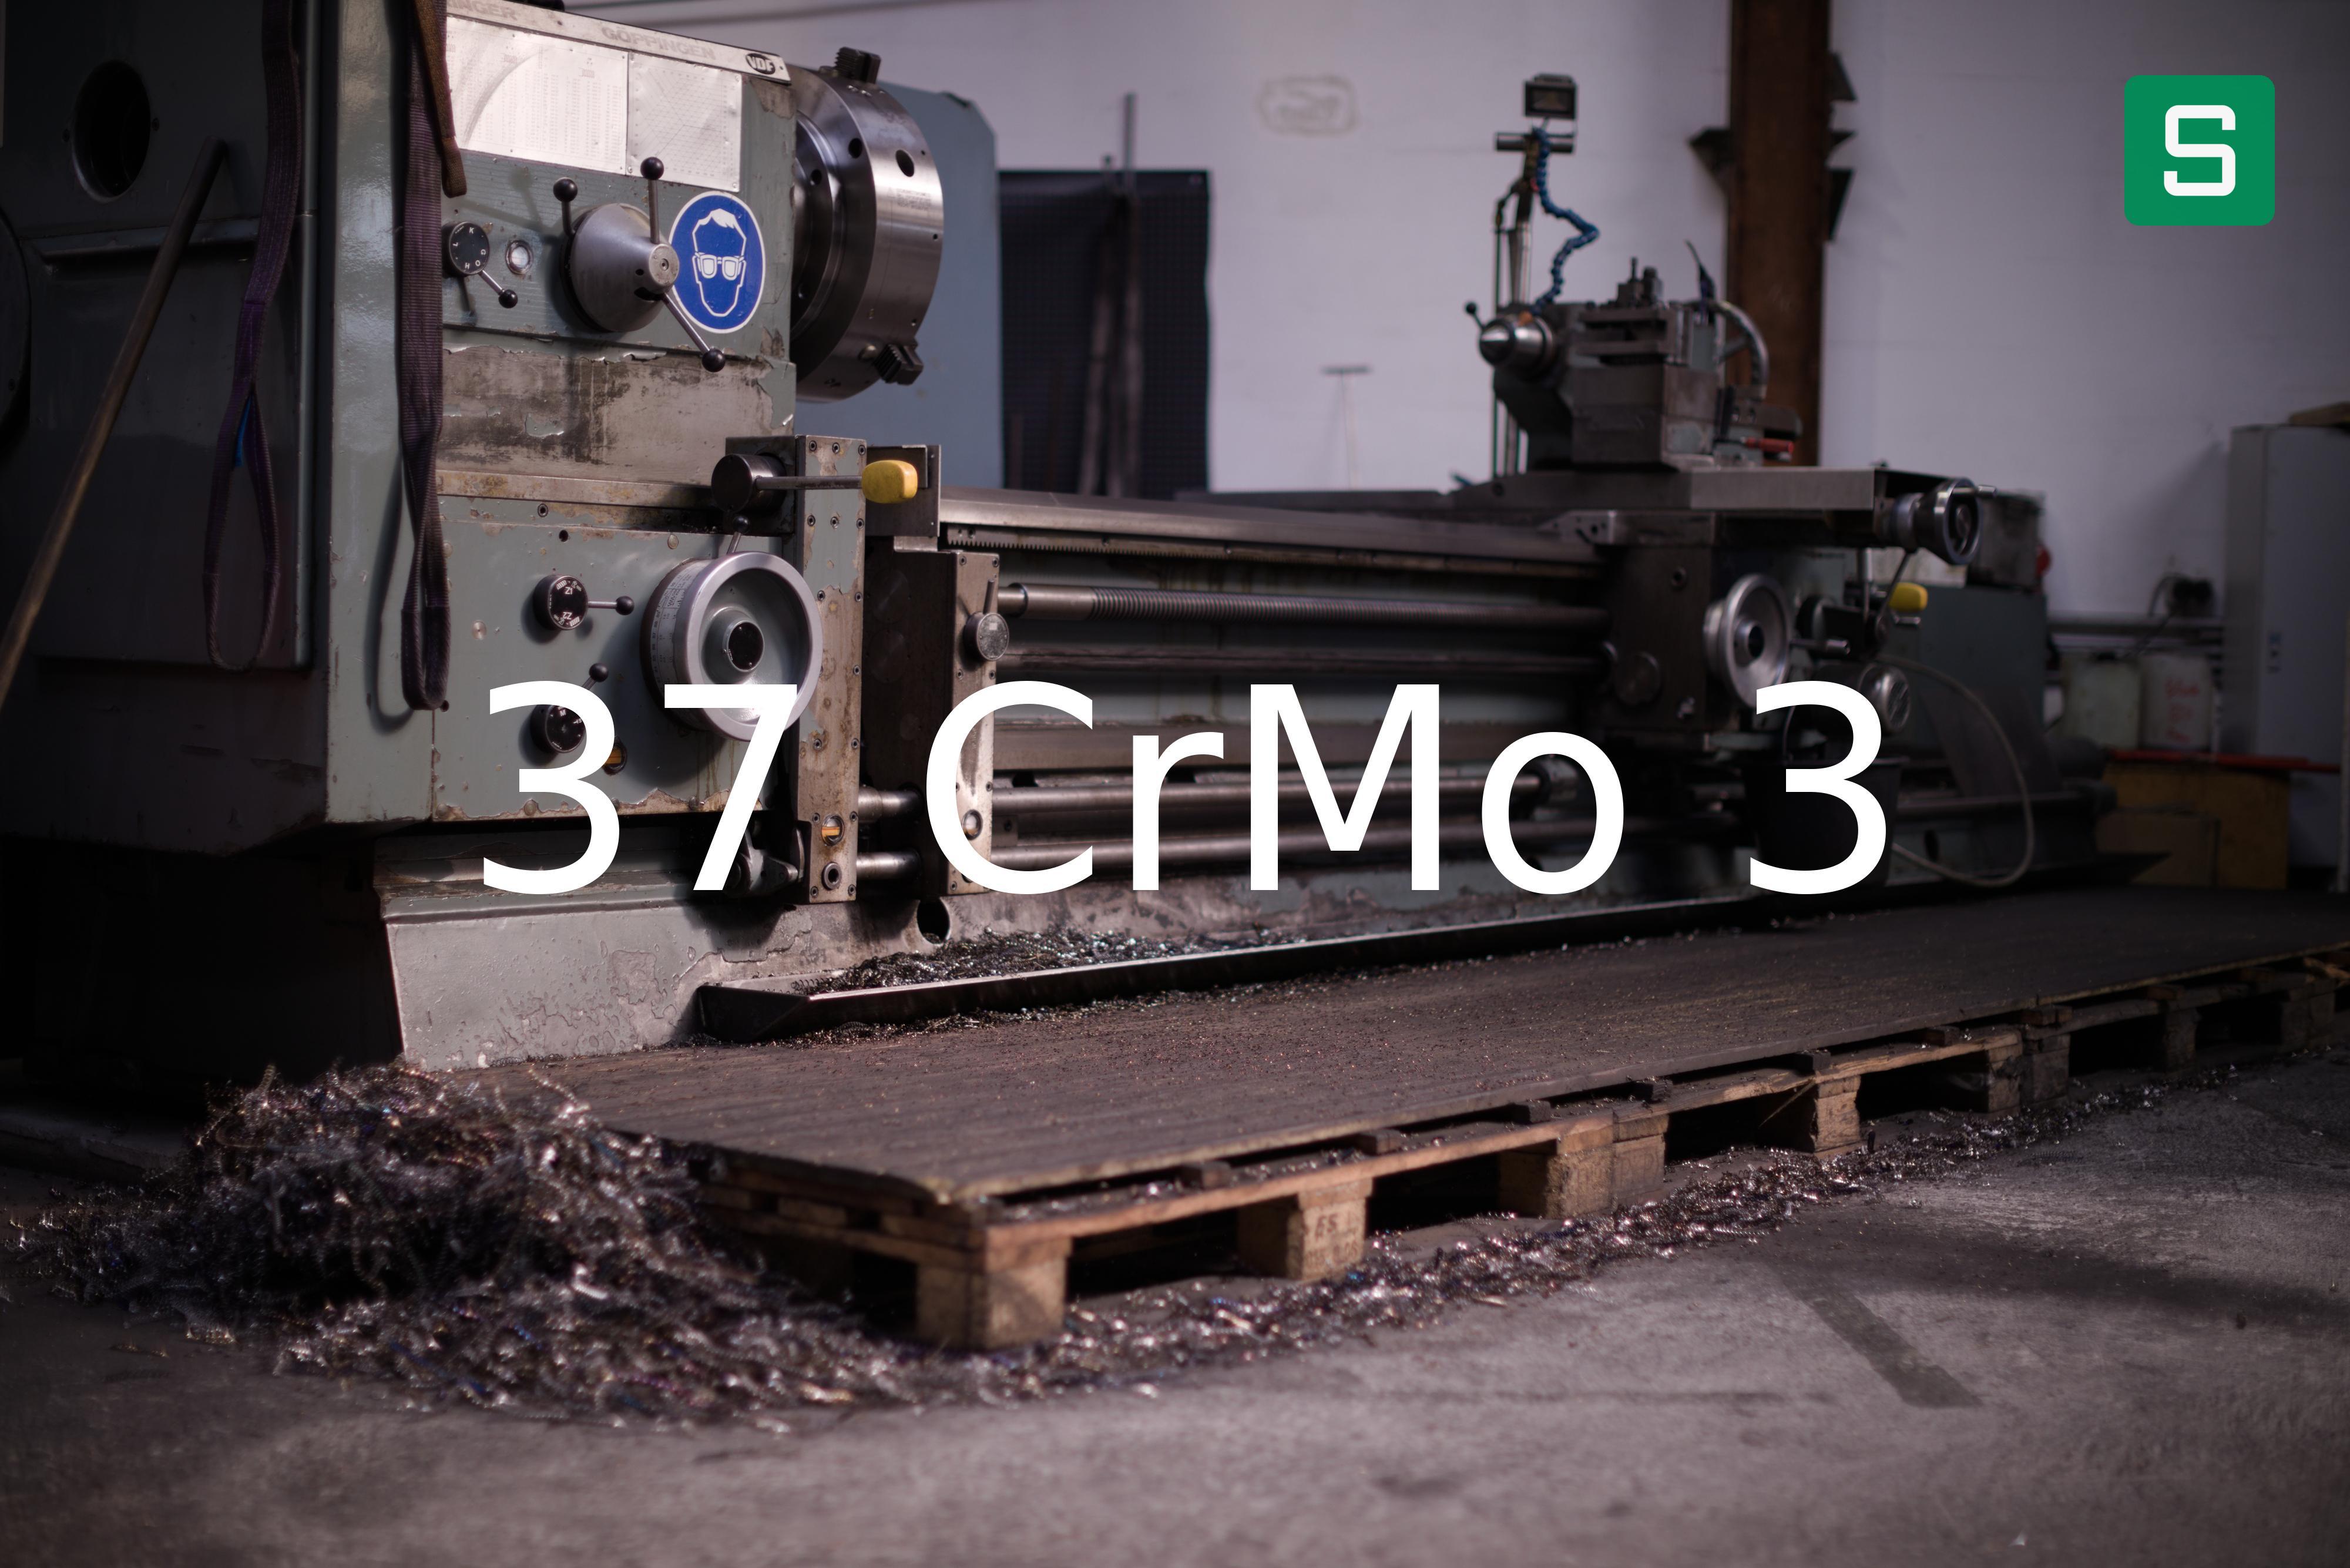 Steel Material: 37 CrMo 3